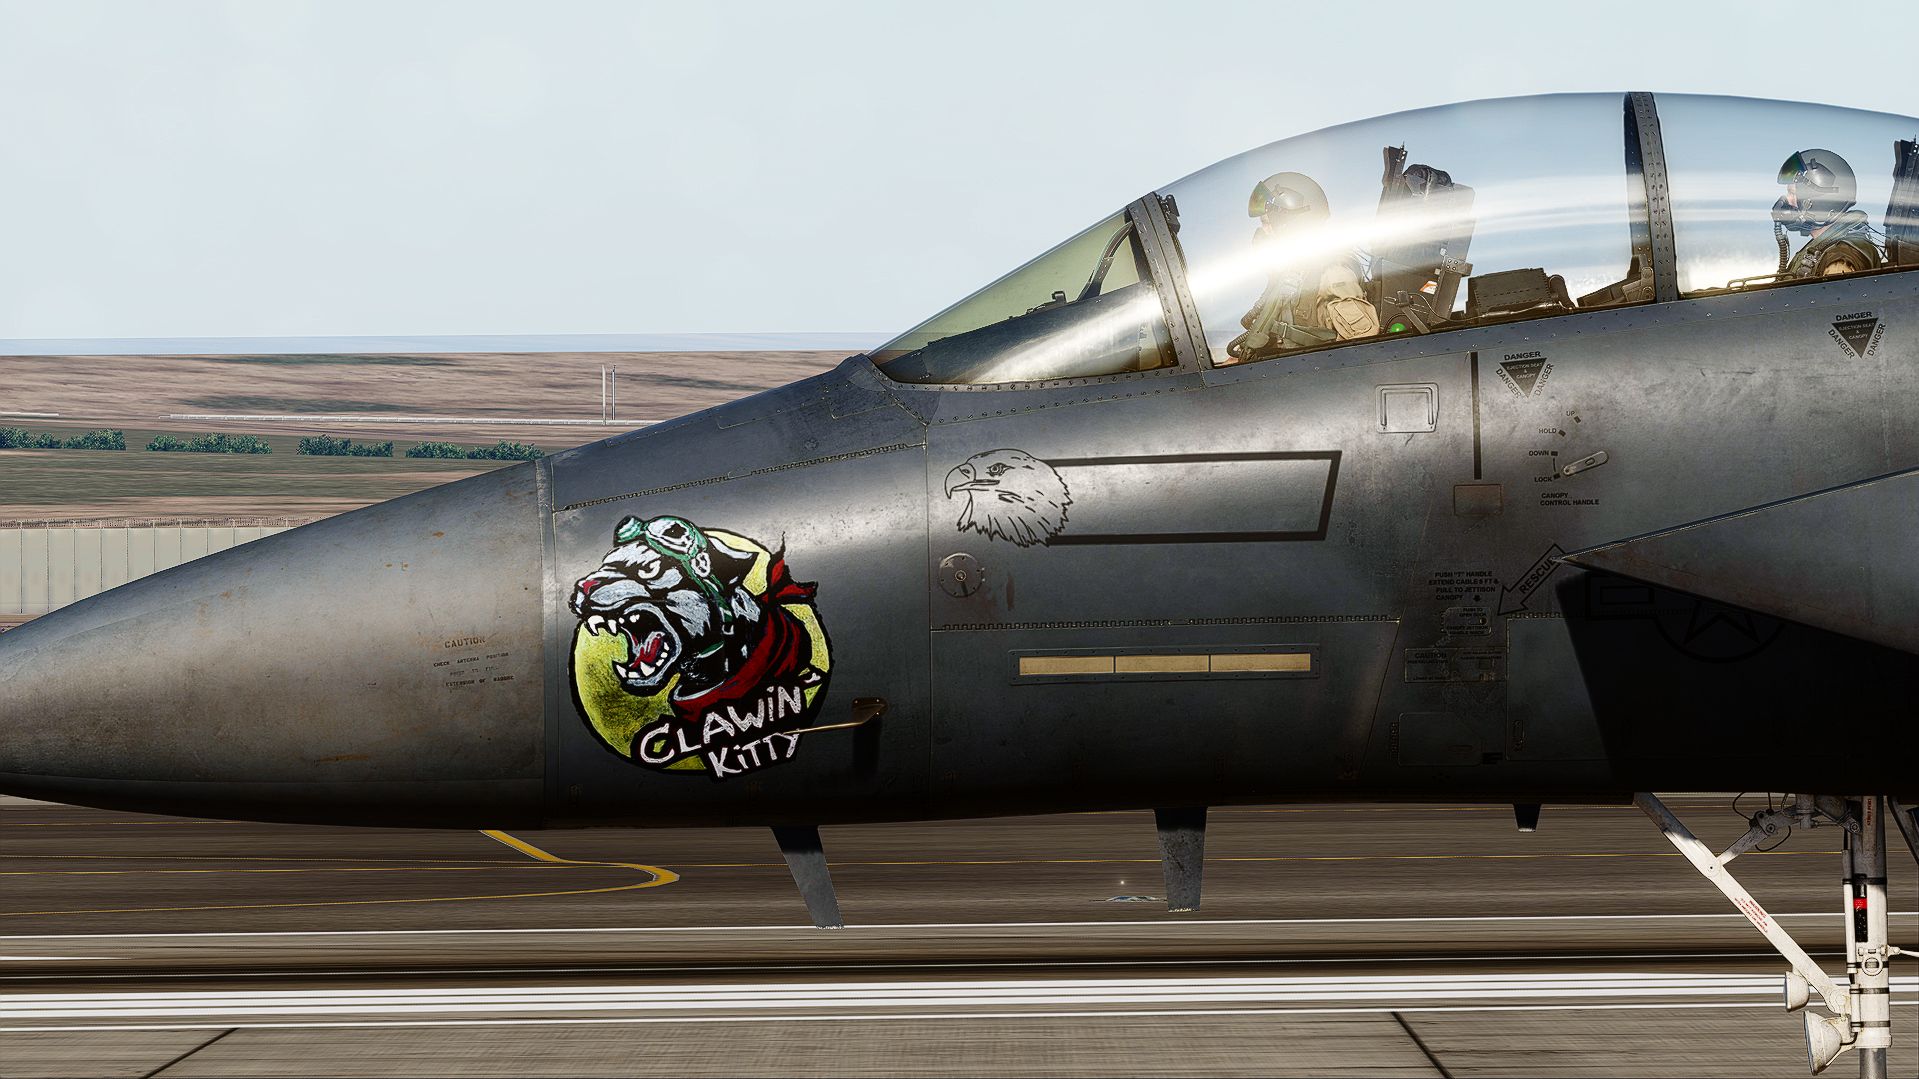 F-15E Strike eagle LN 96-204 "Clawin Kitty" (REWORKED)